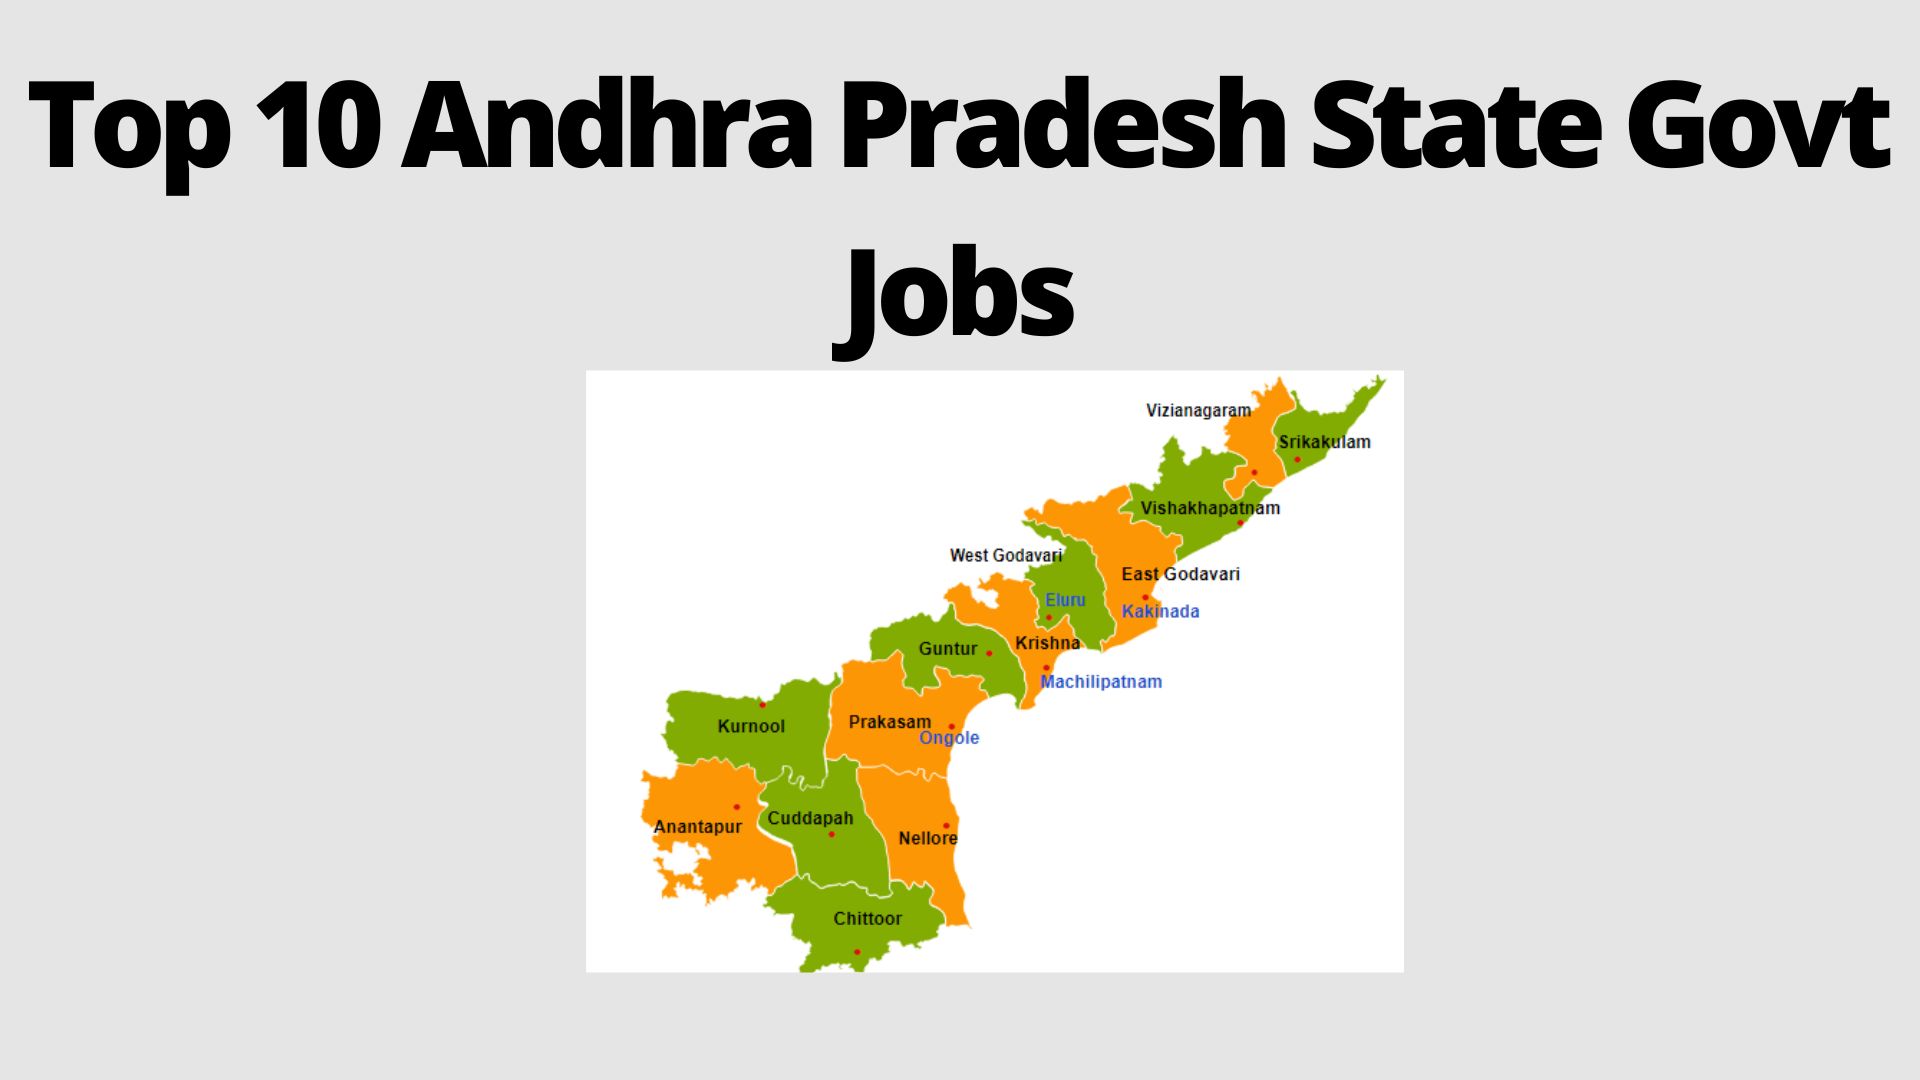 Top 10 Andhra Pradesh State Govt Jobs